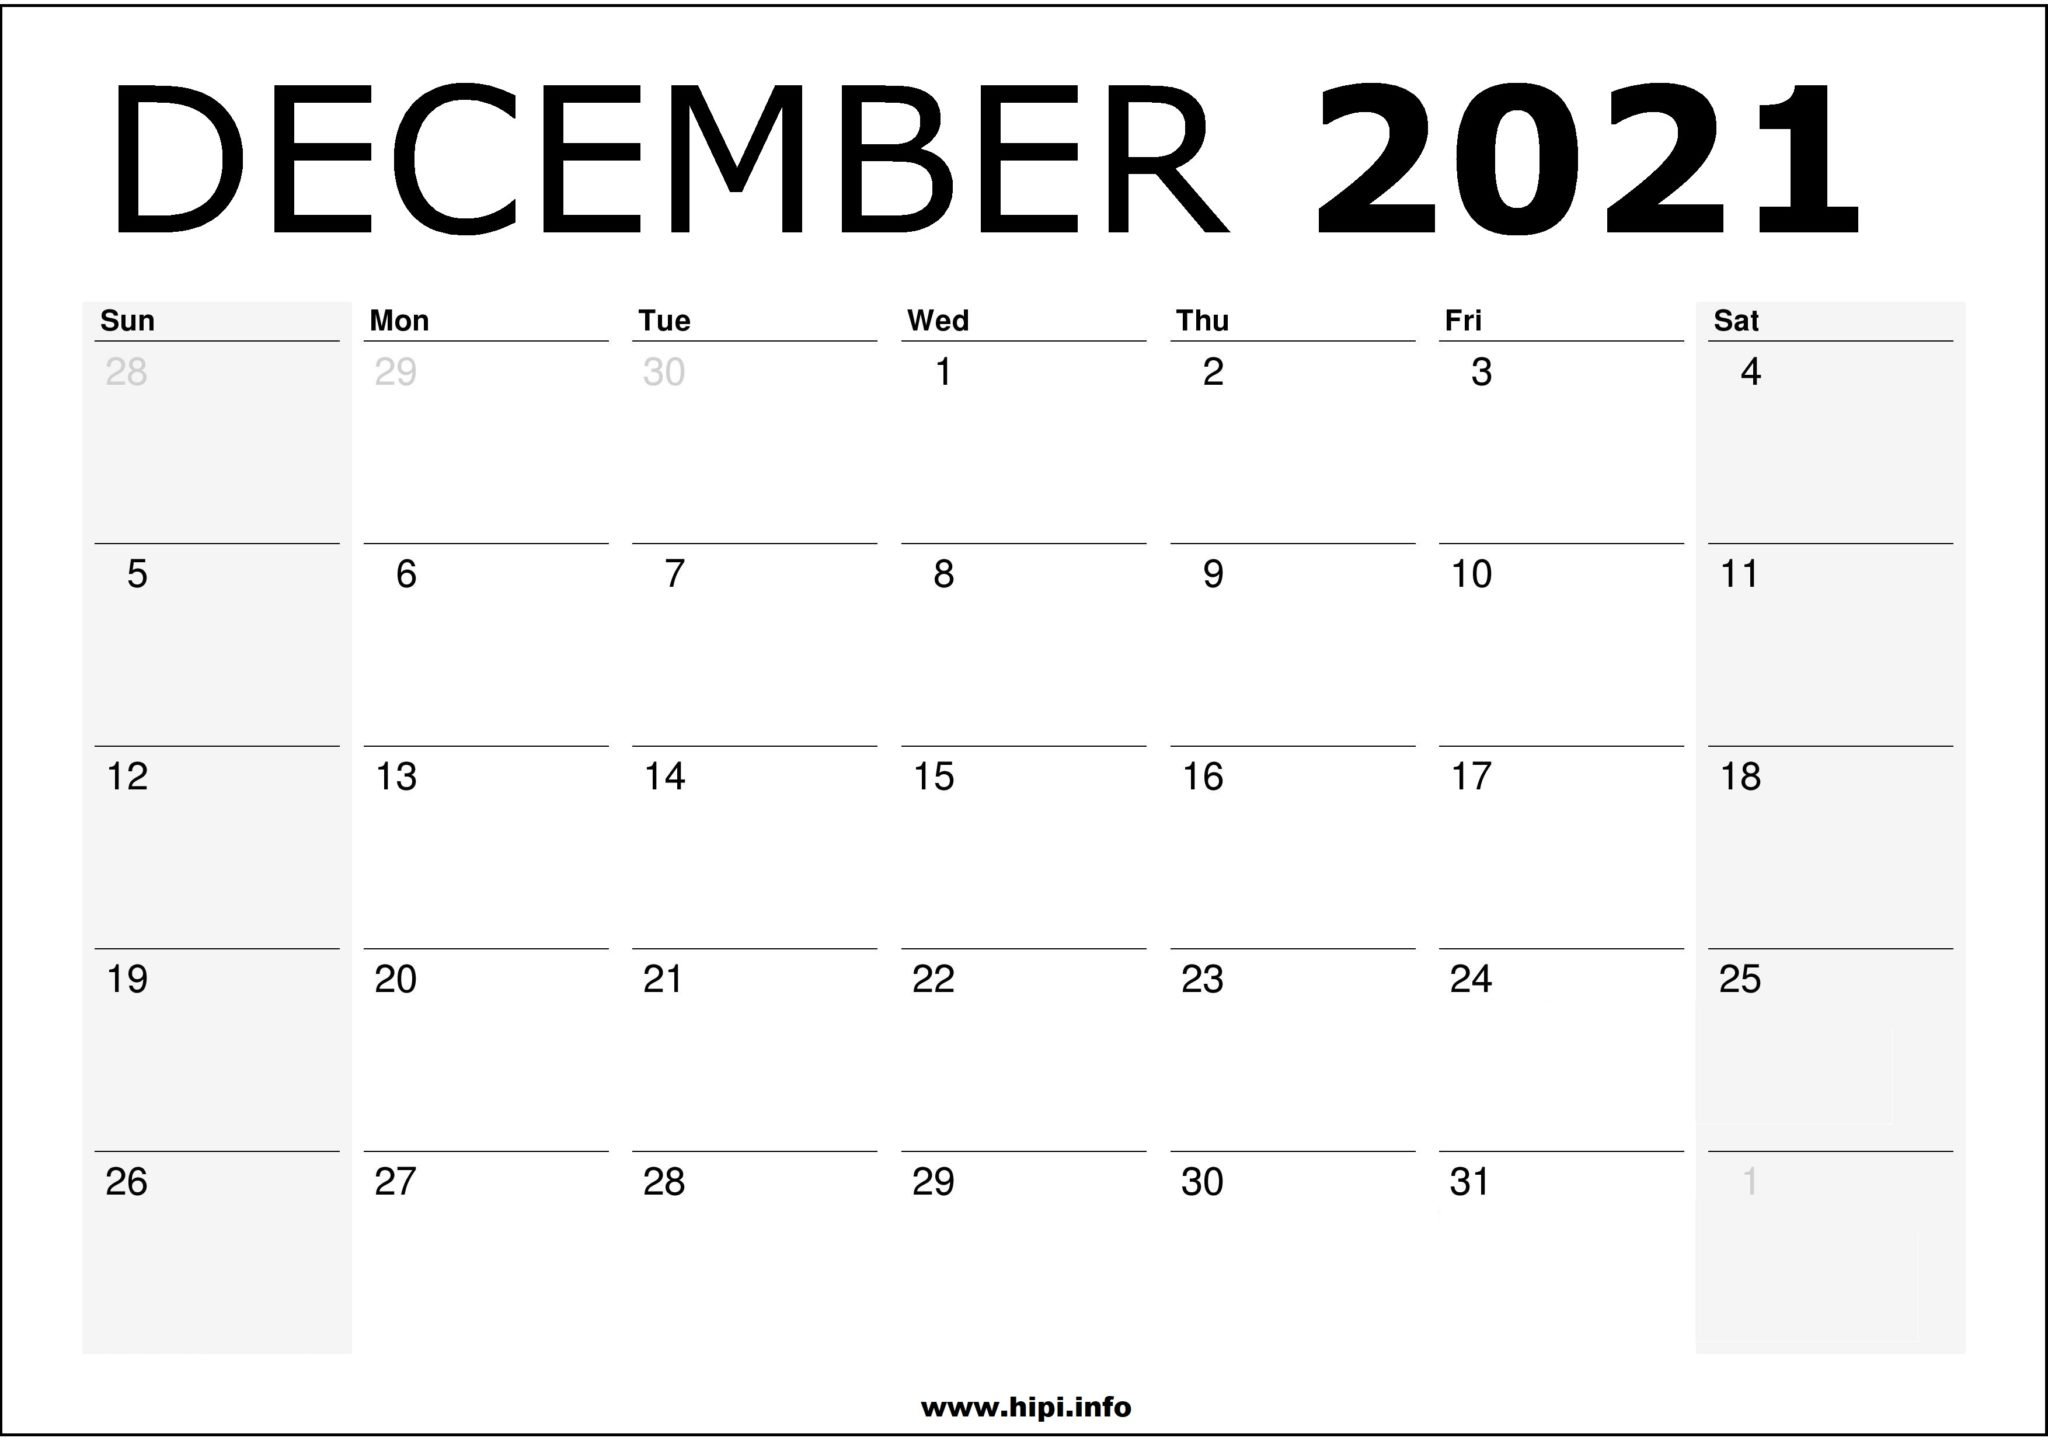 December 2021 Calendar Printable - Monthly Calendar Free December 2021 Day Calendar